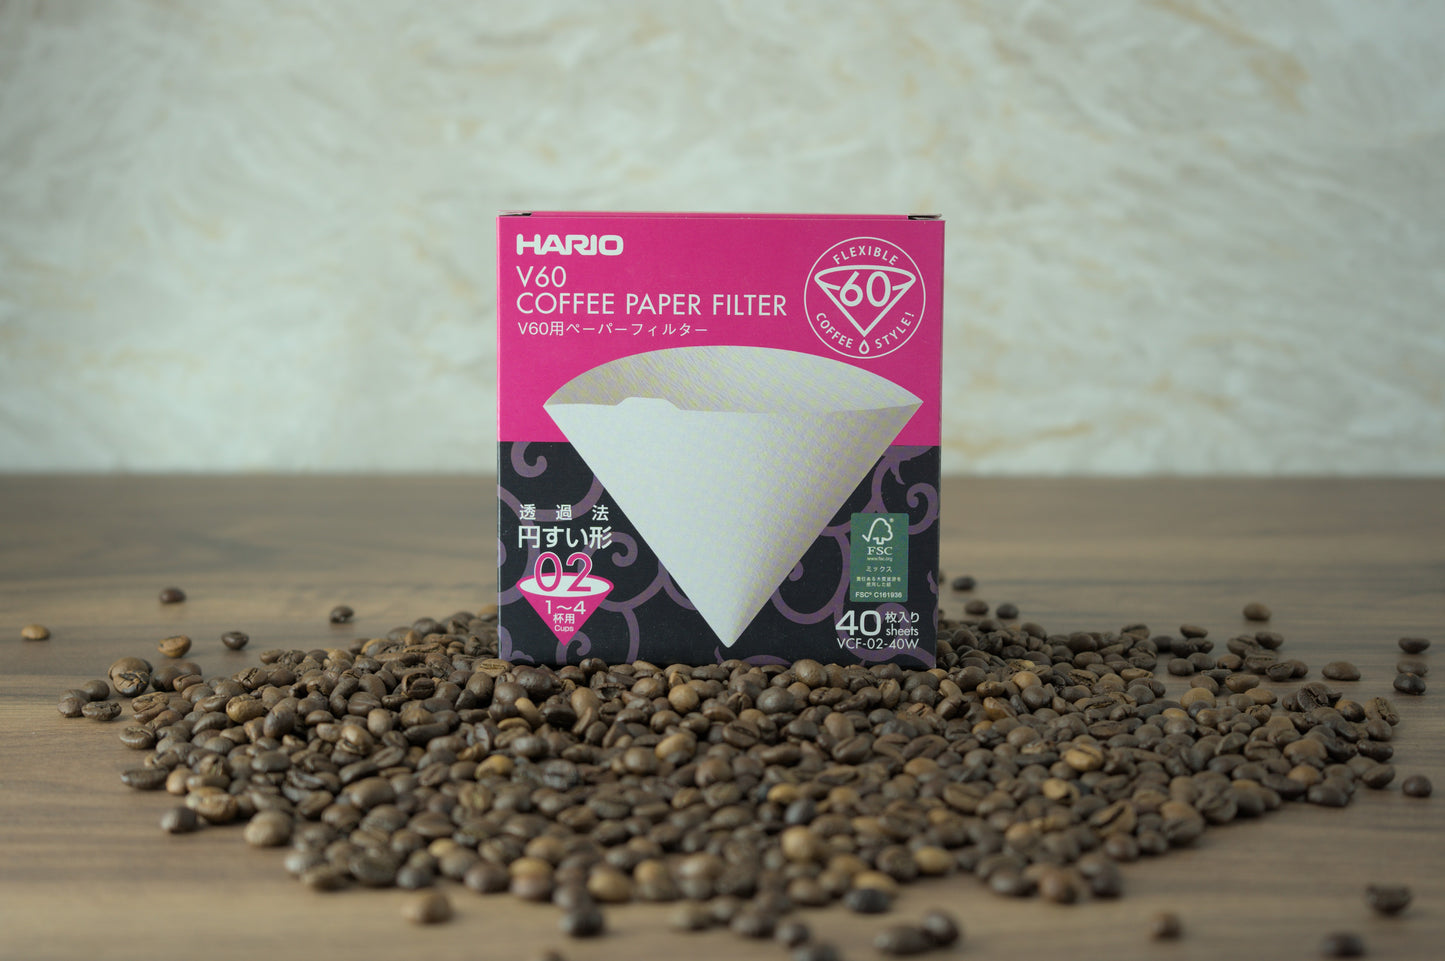 V60 Coffee Paper Filter 02